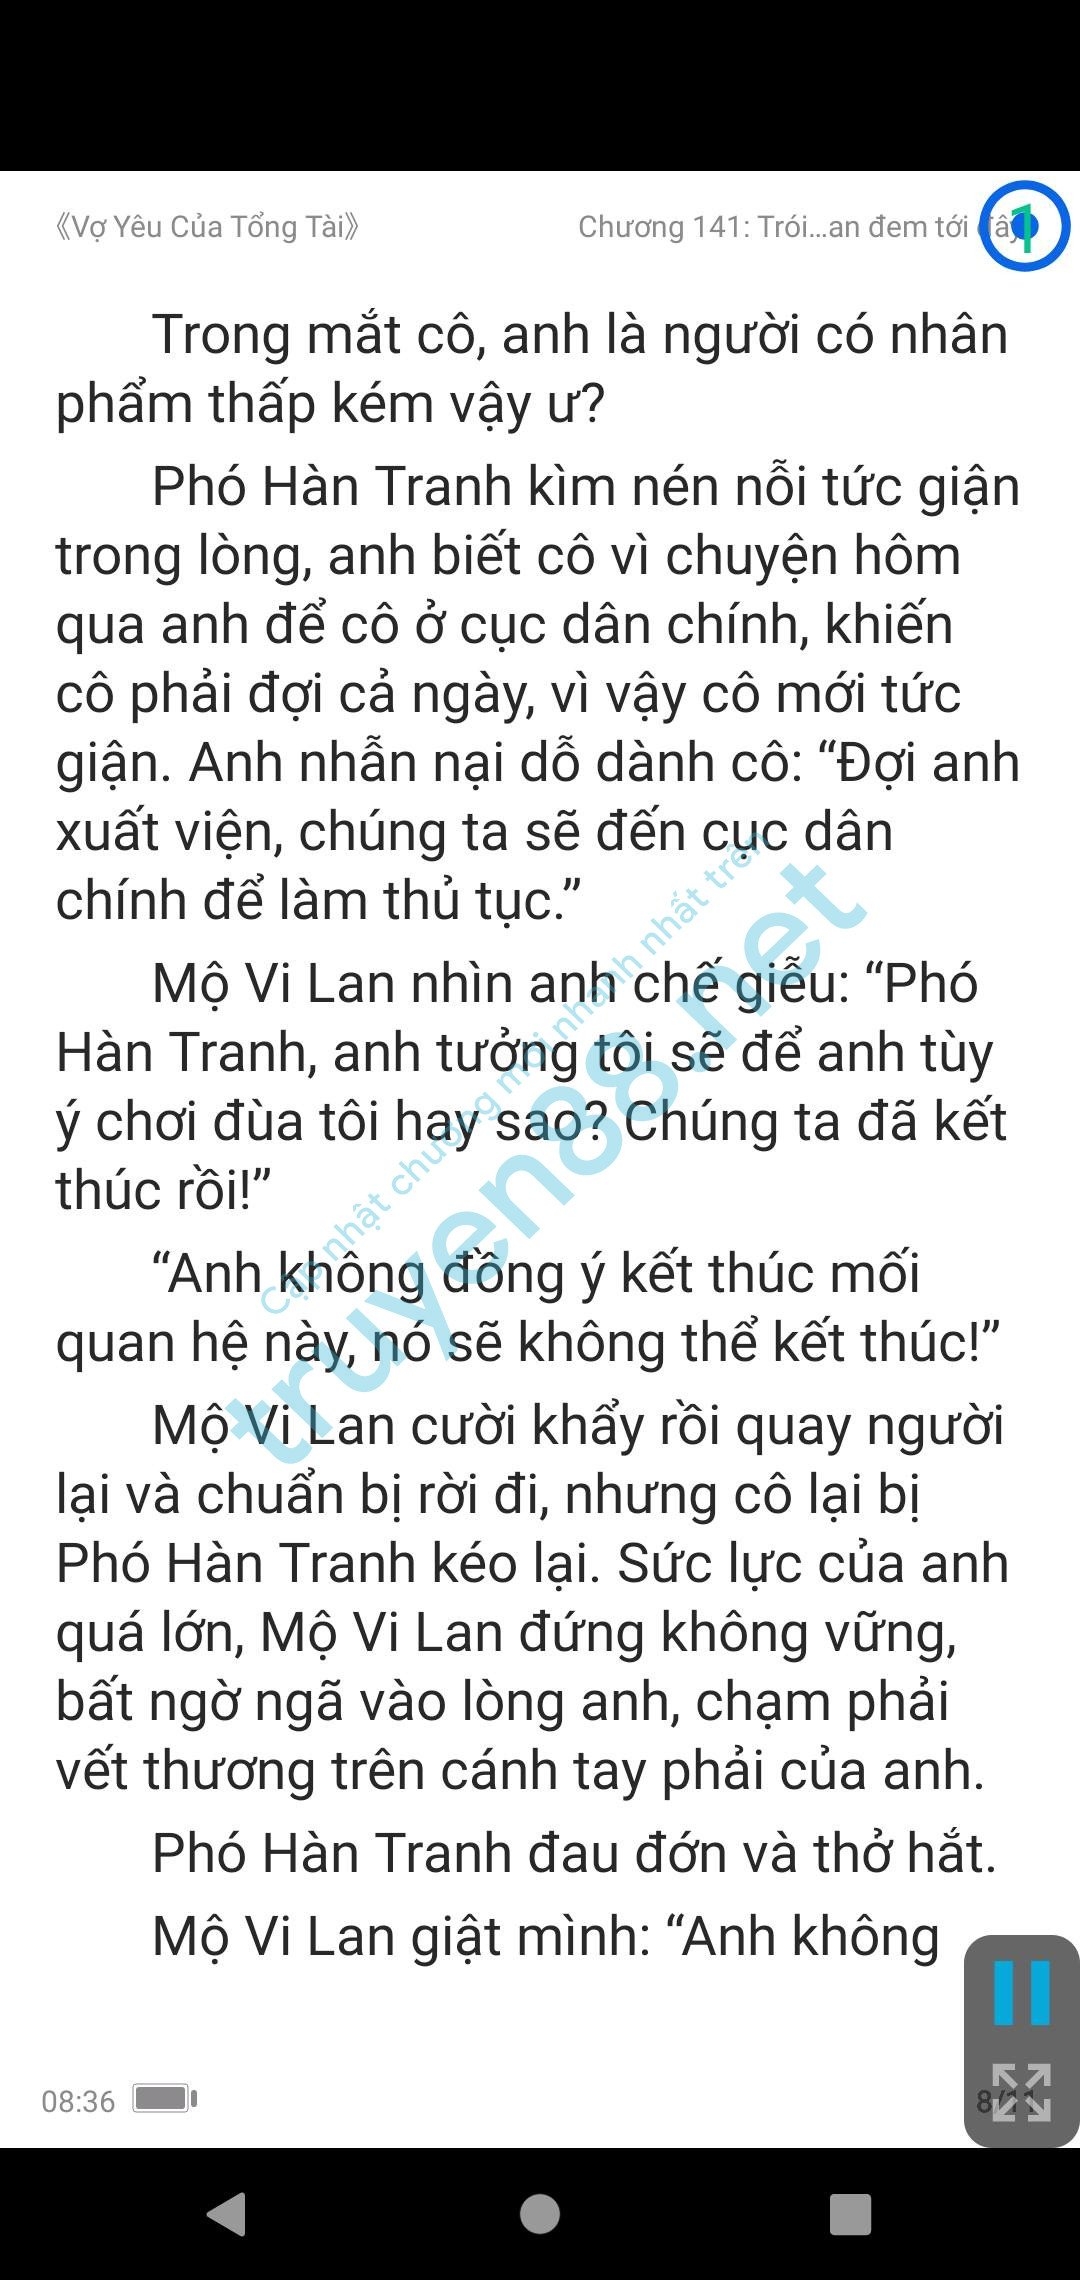 vo-yeu-cua-tong-tai-mo-vi-lan--pho-han-tranh-141-0